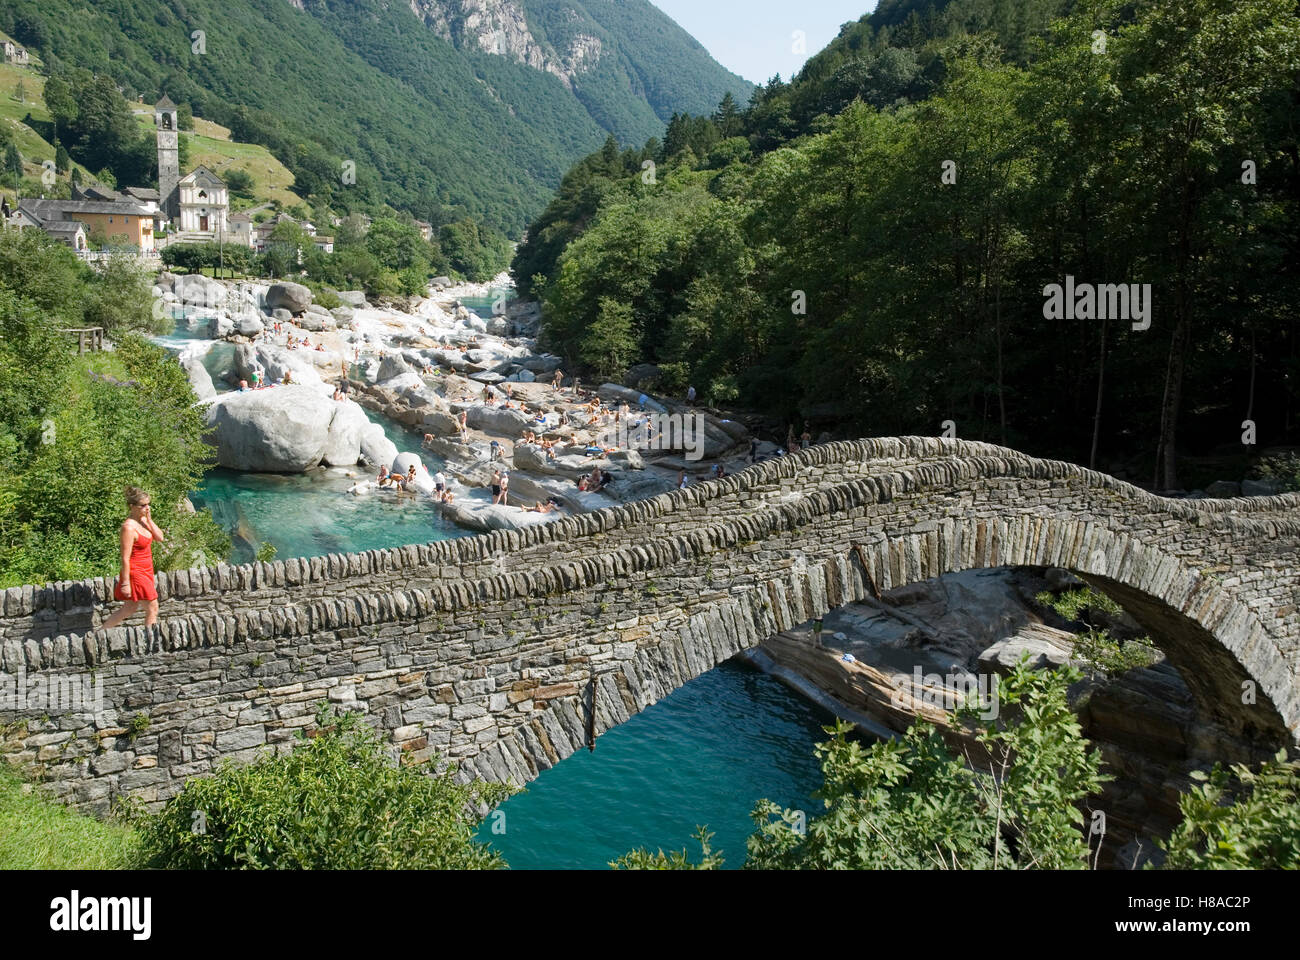 Römische Brücke Ponte dei Salti in Lavertezzo, Tessin, Schweiz, Europa  Stockfotografie - Alamy